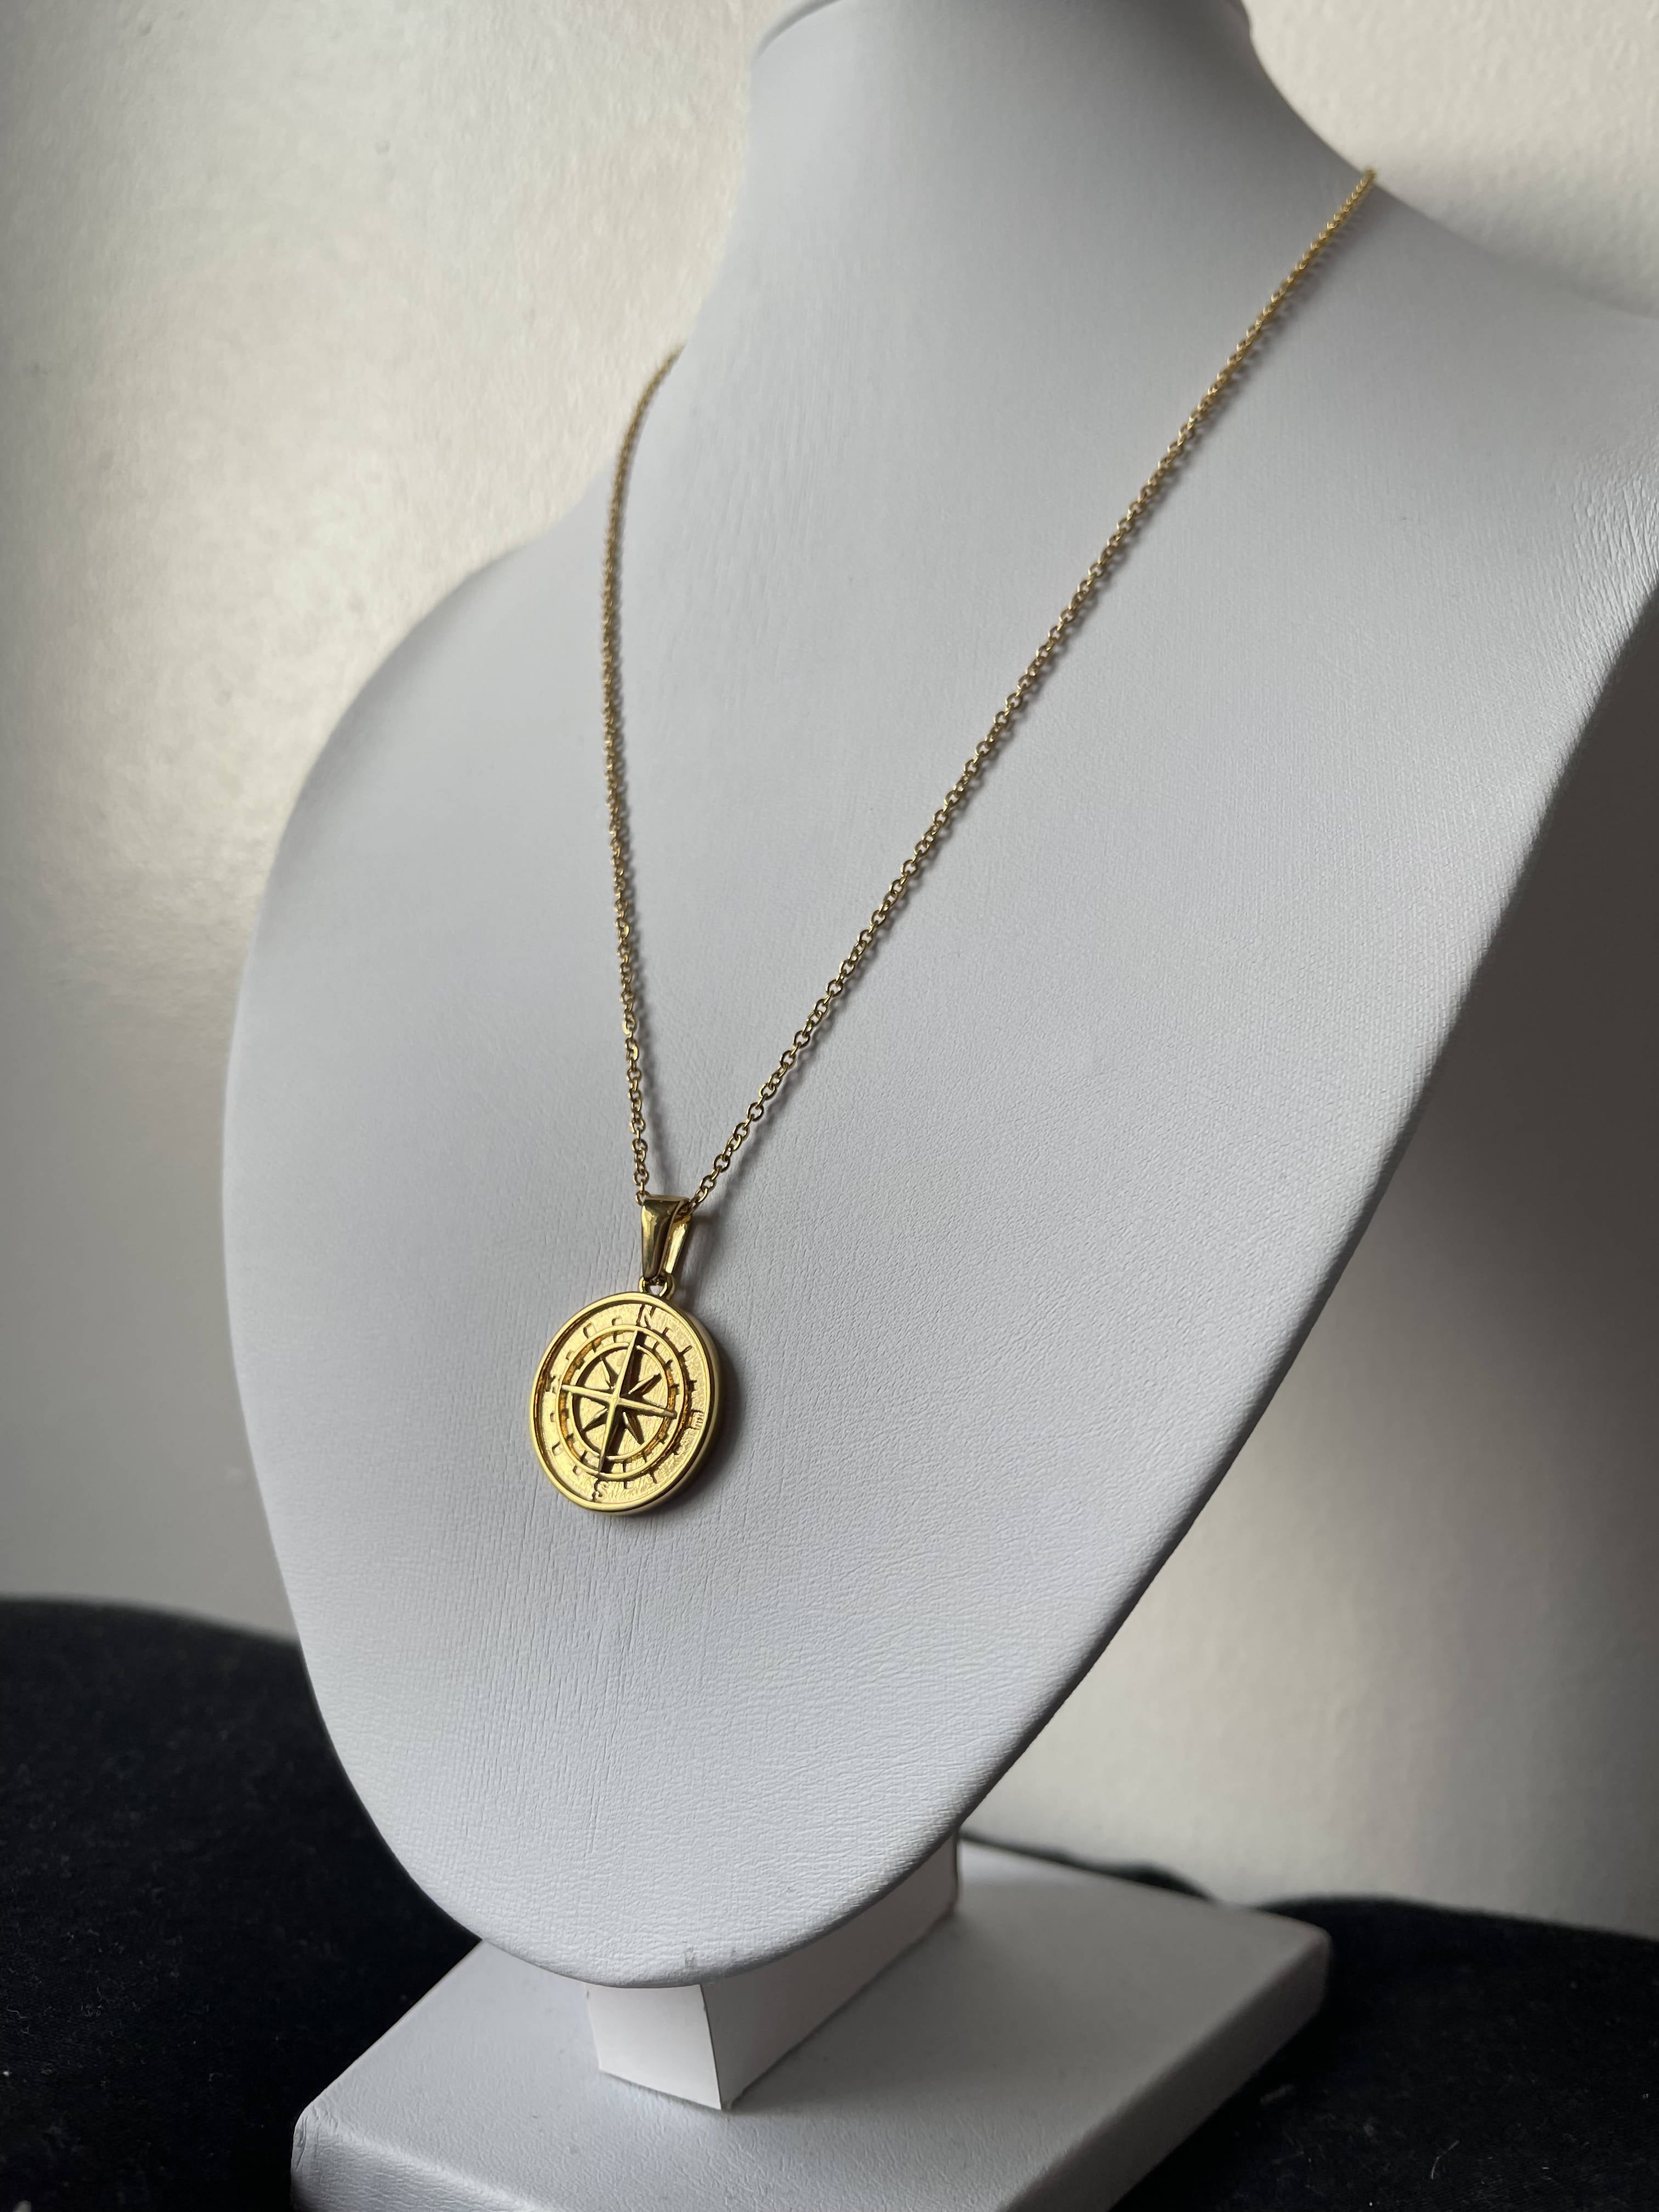 Gold compass pendant necklace